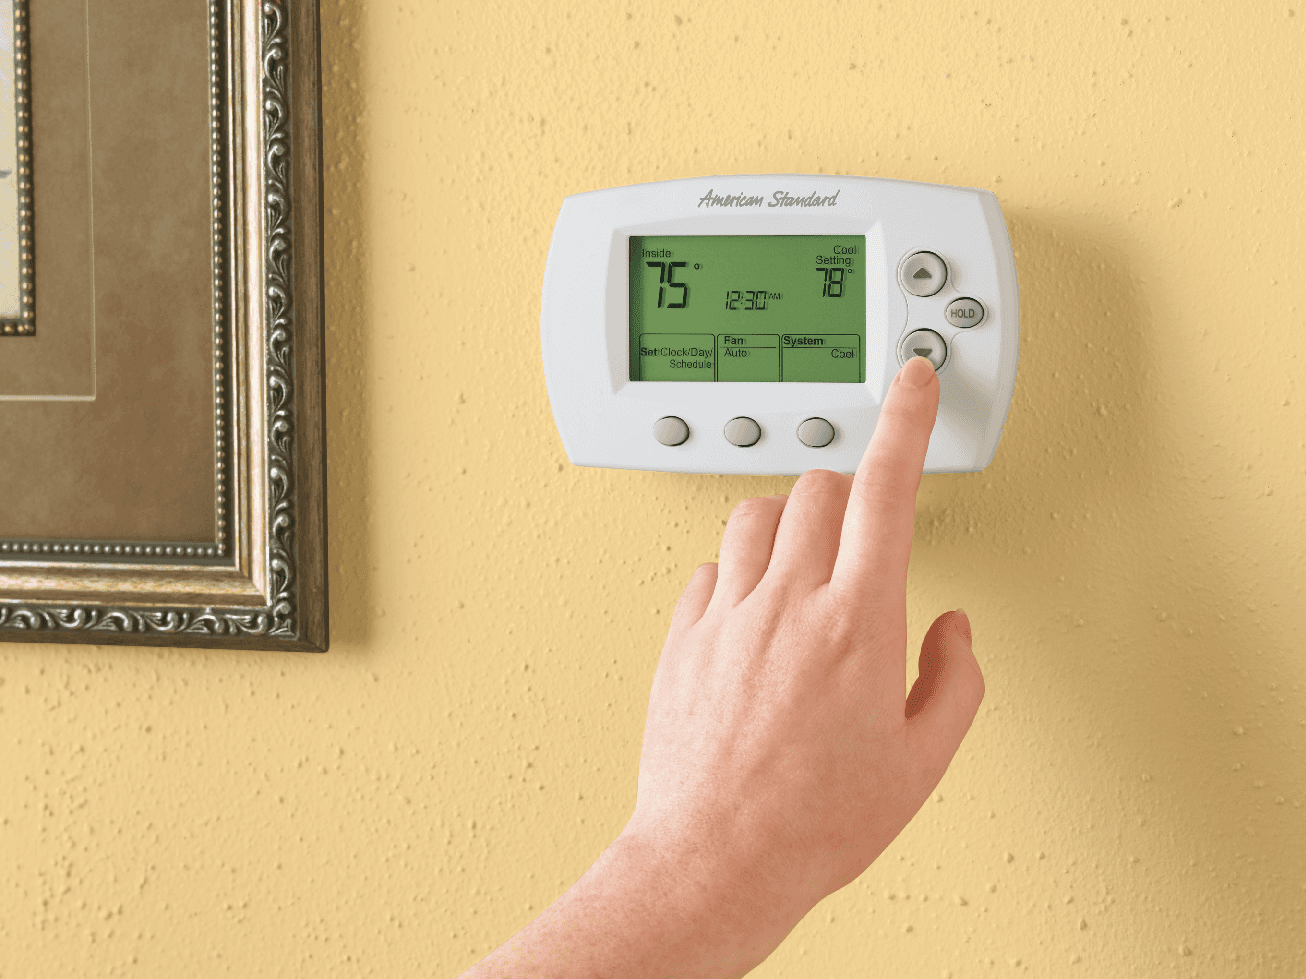 American Standard Thermostat